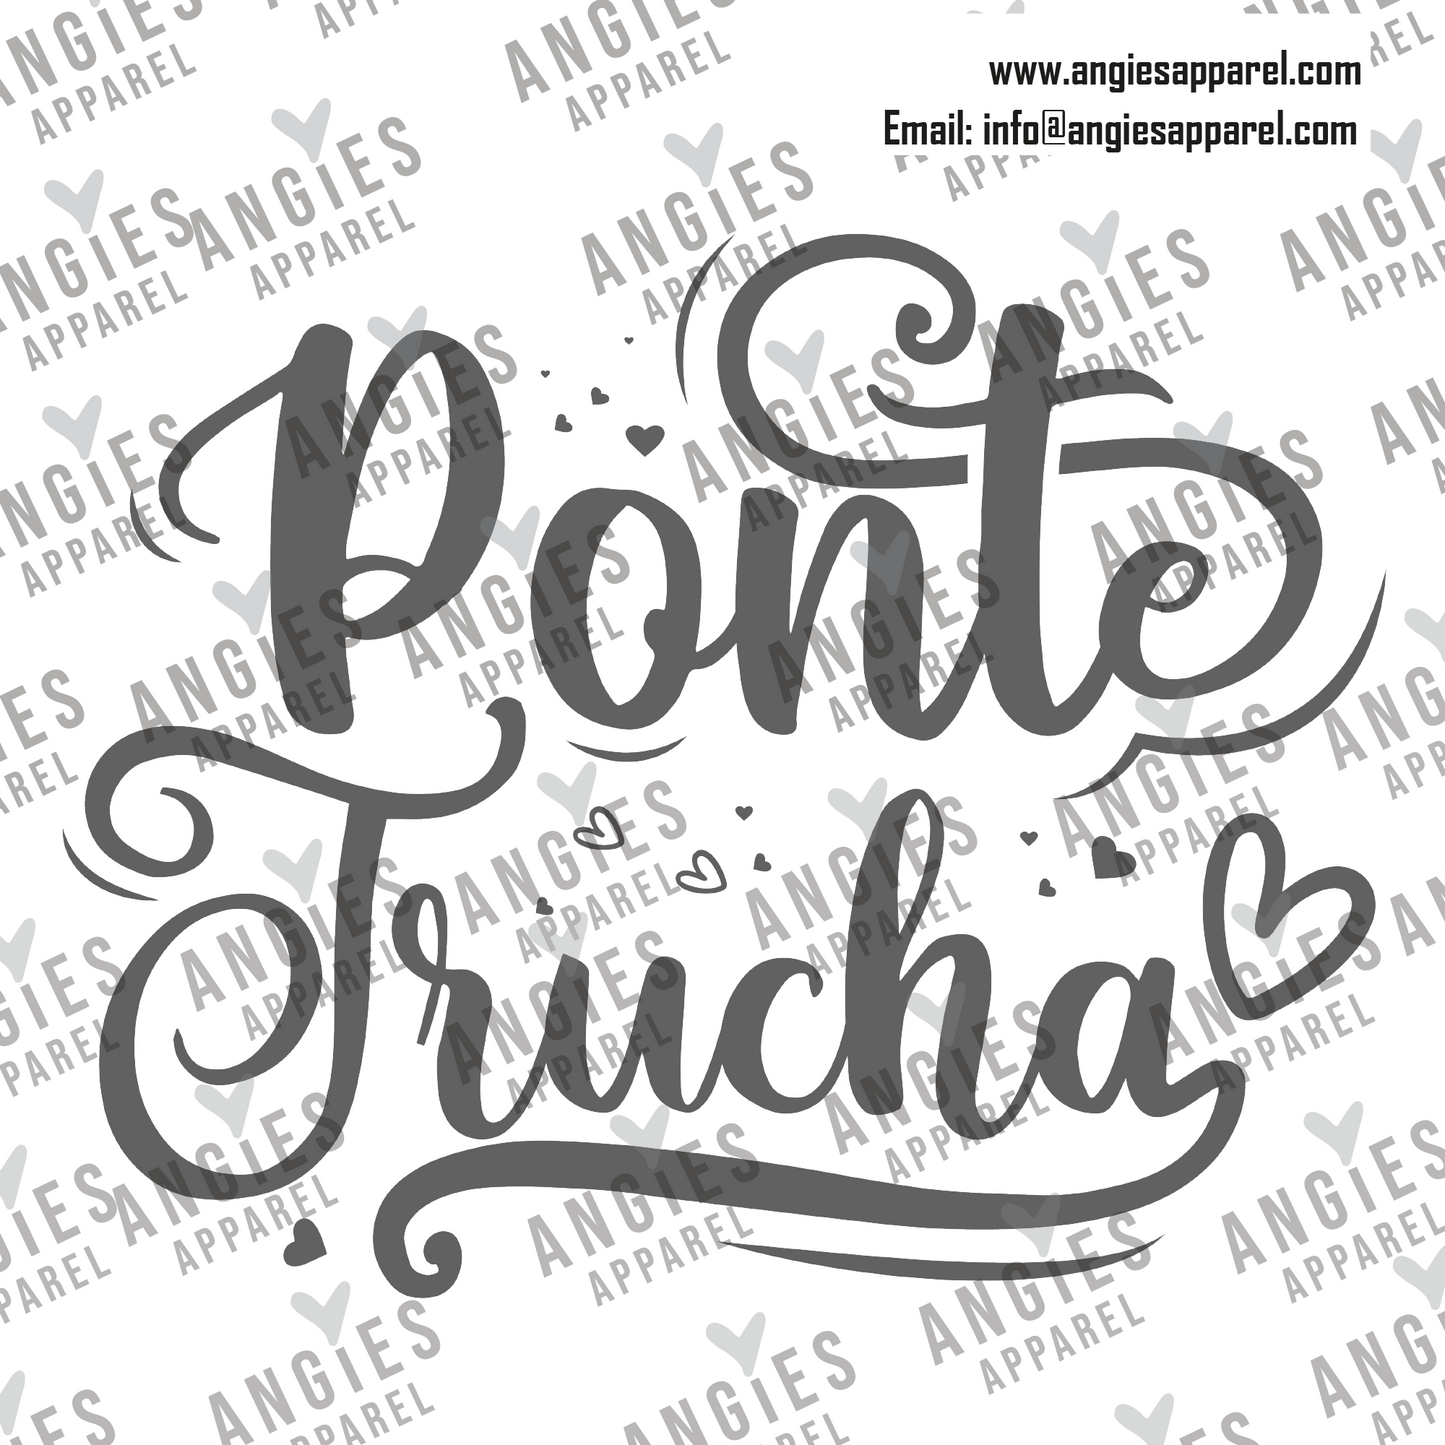 5. Latinas - Ponte Trucha - Ready to Press